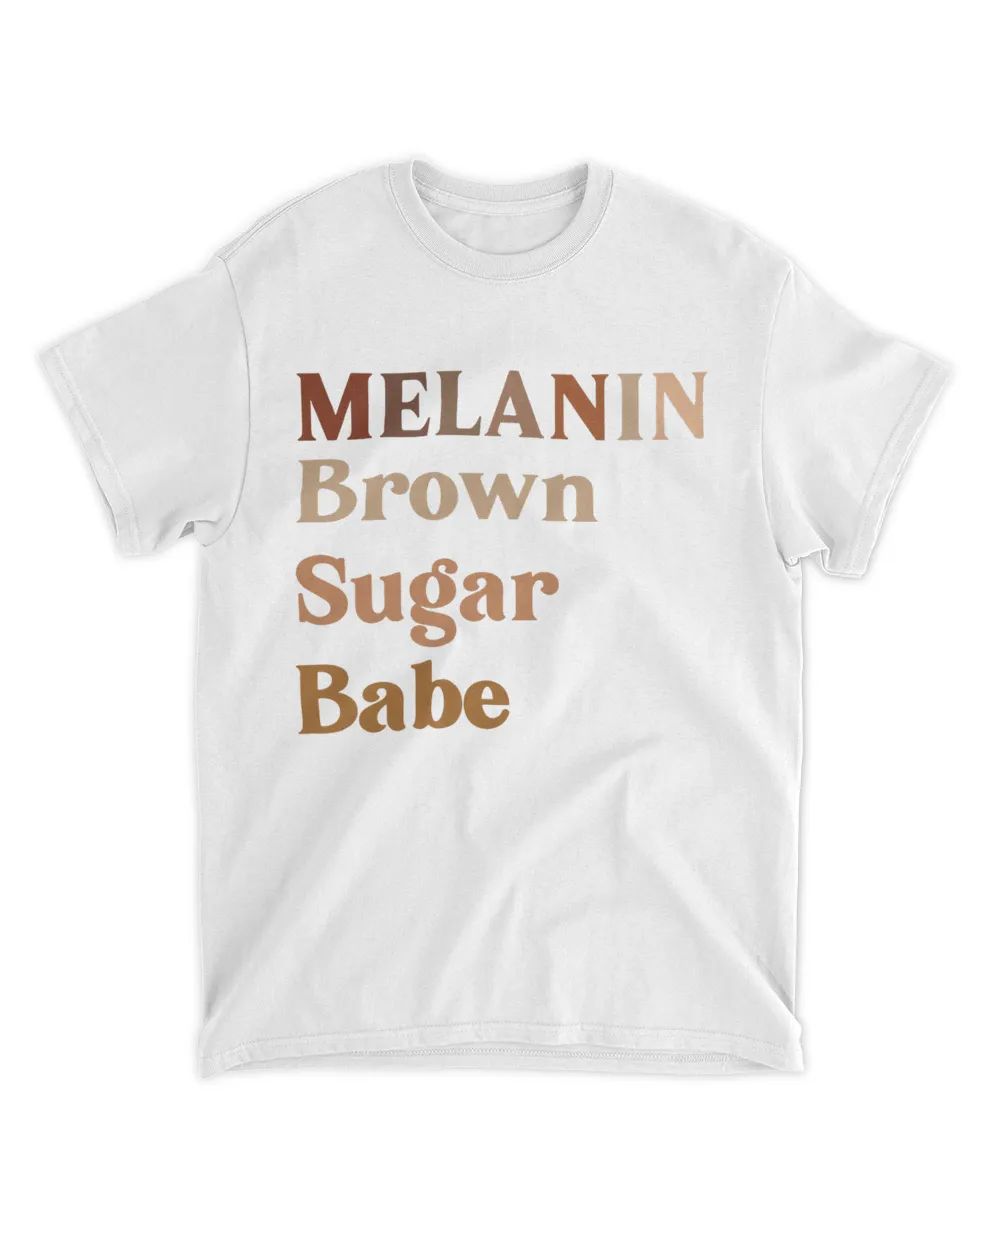 Melanin Brown Sugar Babe Shirt